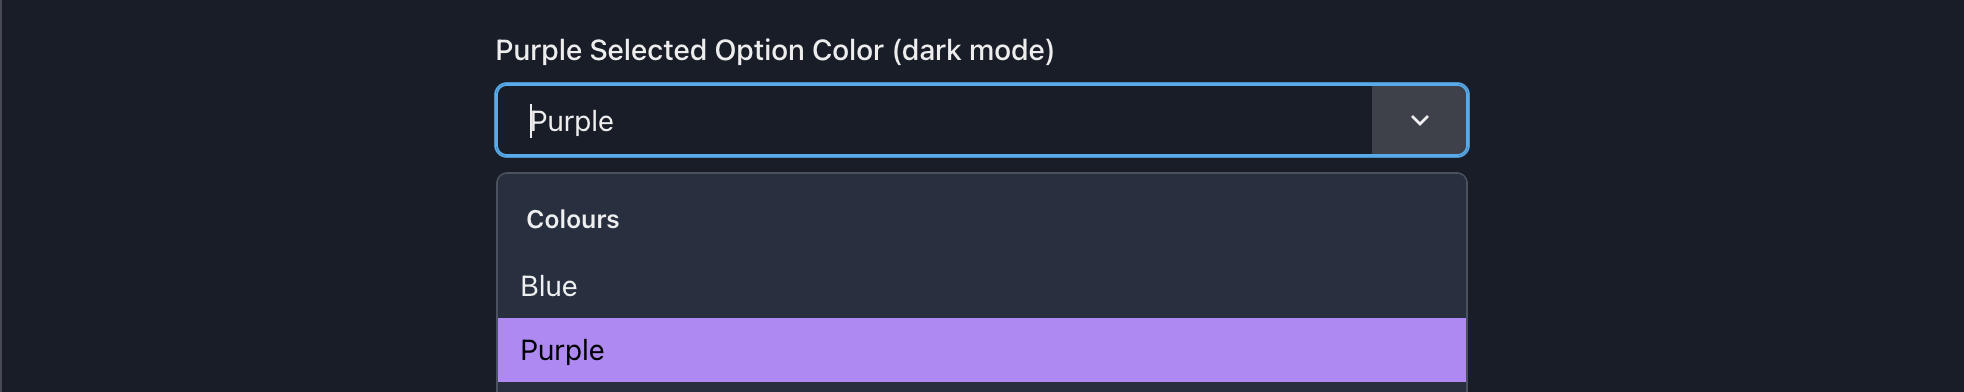 purple-selected-option-dark.png